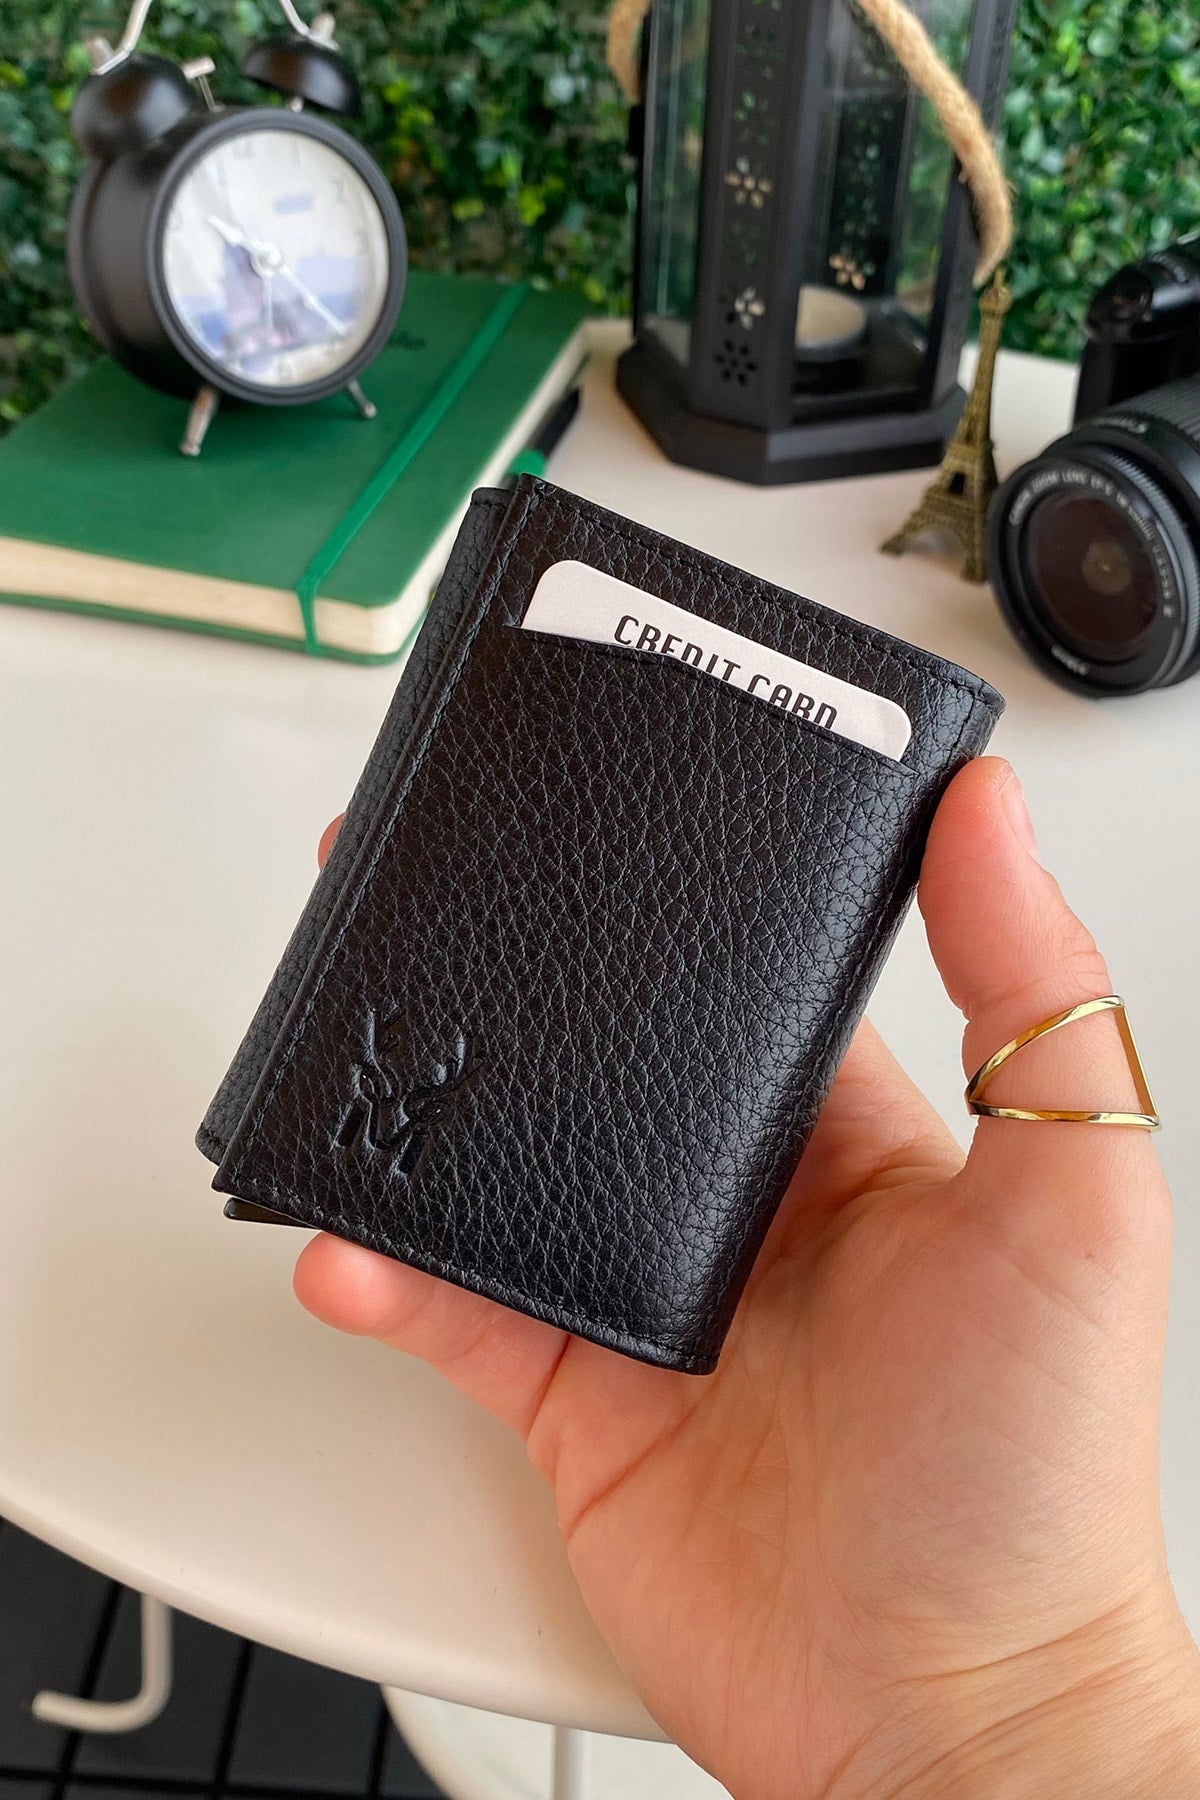 Pescol - Genuine Leather Black Smart Card Holder / Wallet with Rfid Protection Mechanism, Top Level Craftsmanship